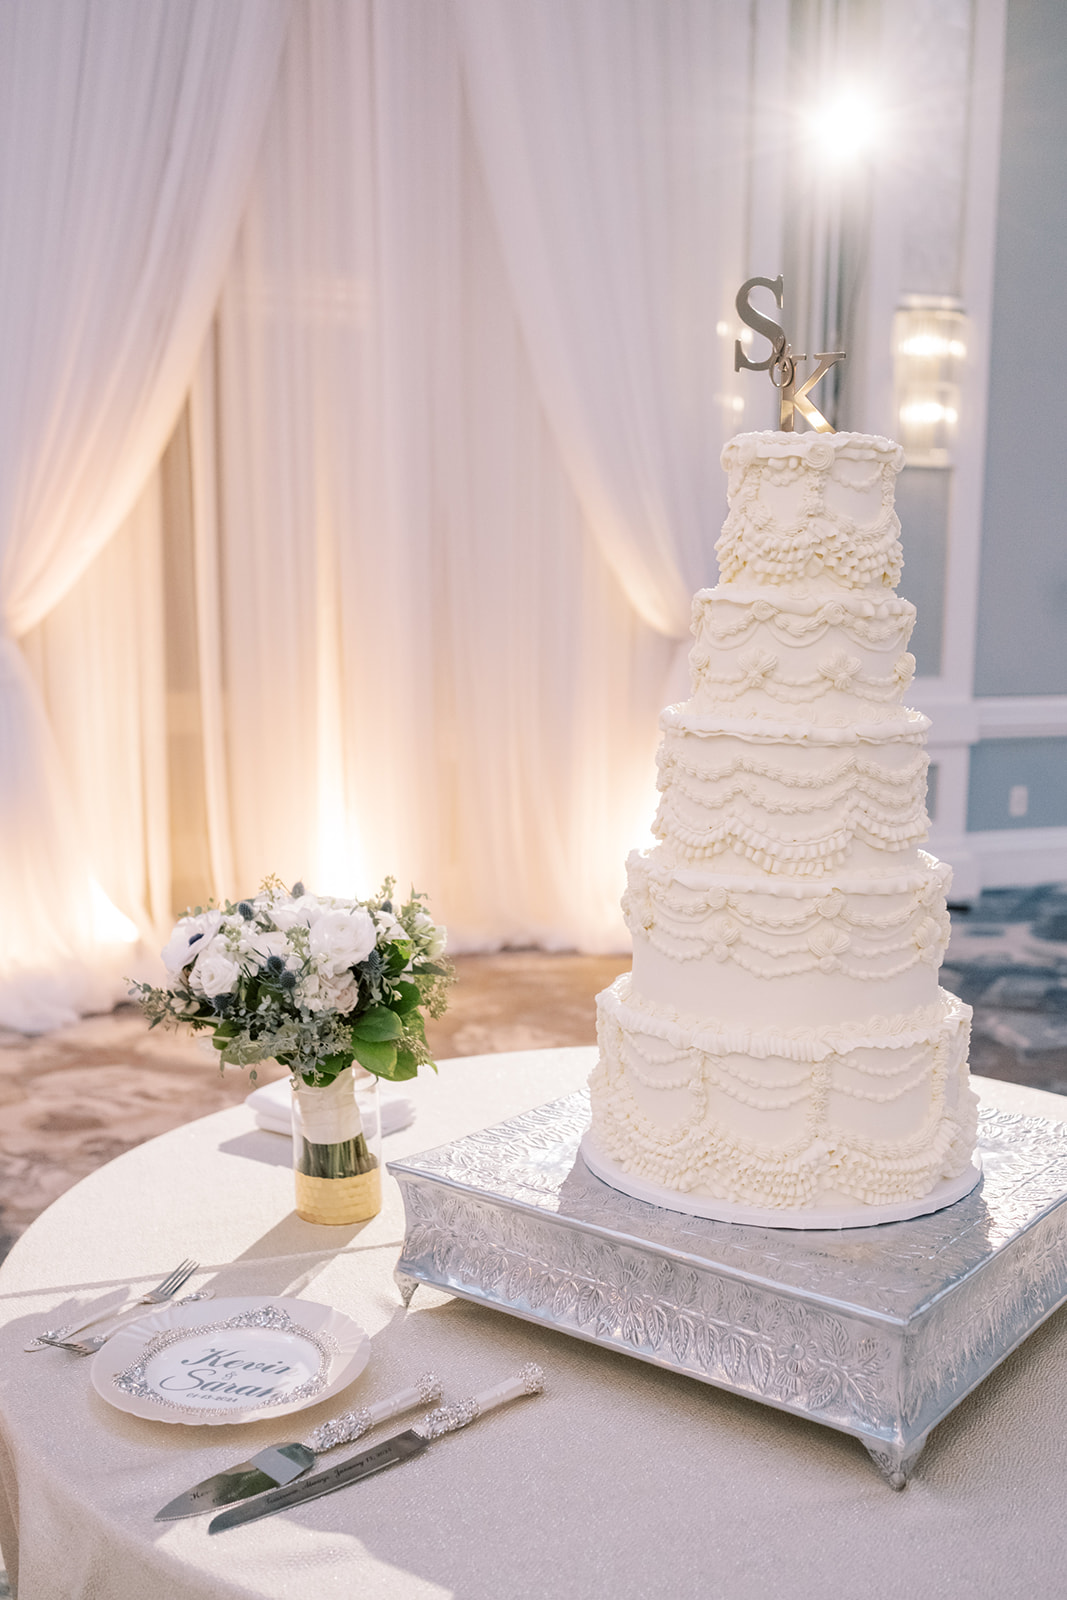 Amazing cake by Danas Cake Shoppe at Lansdowne Resort wedding